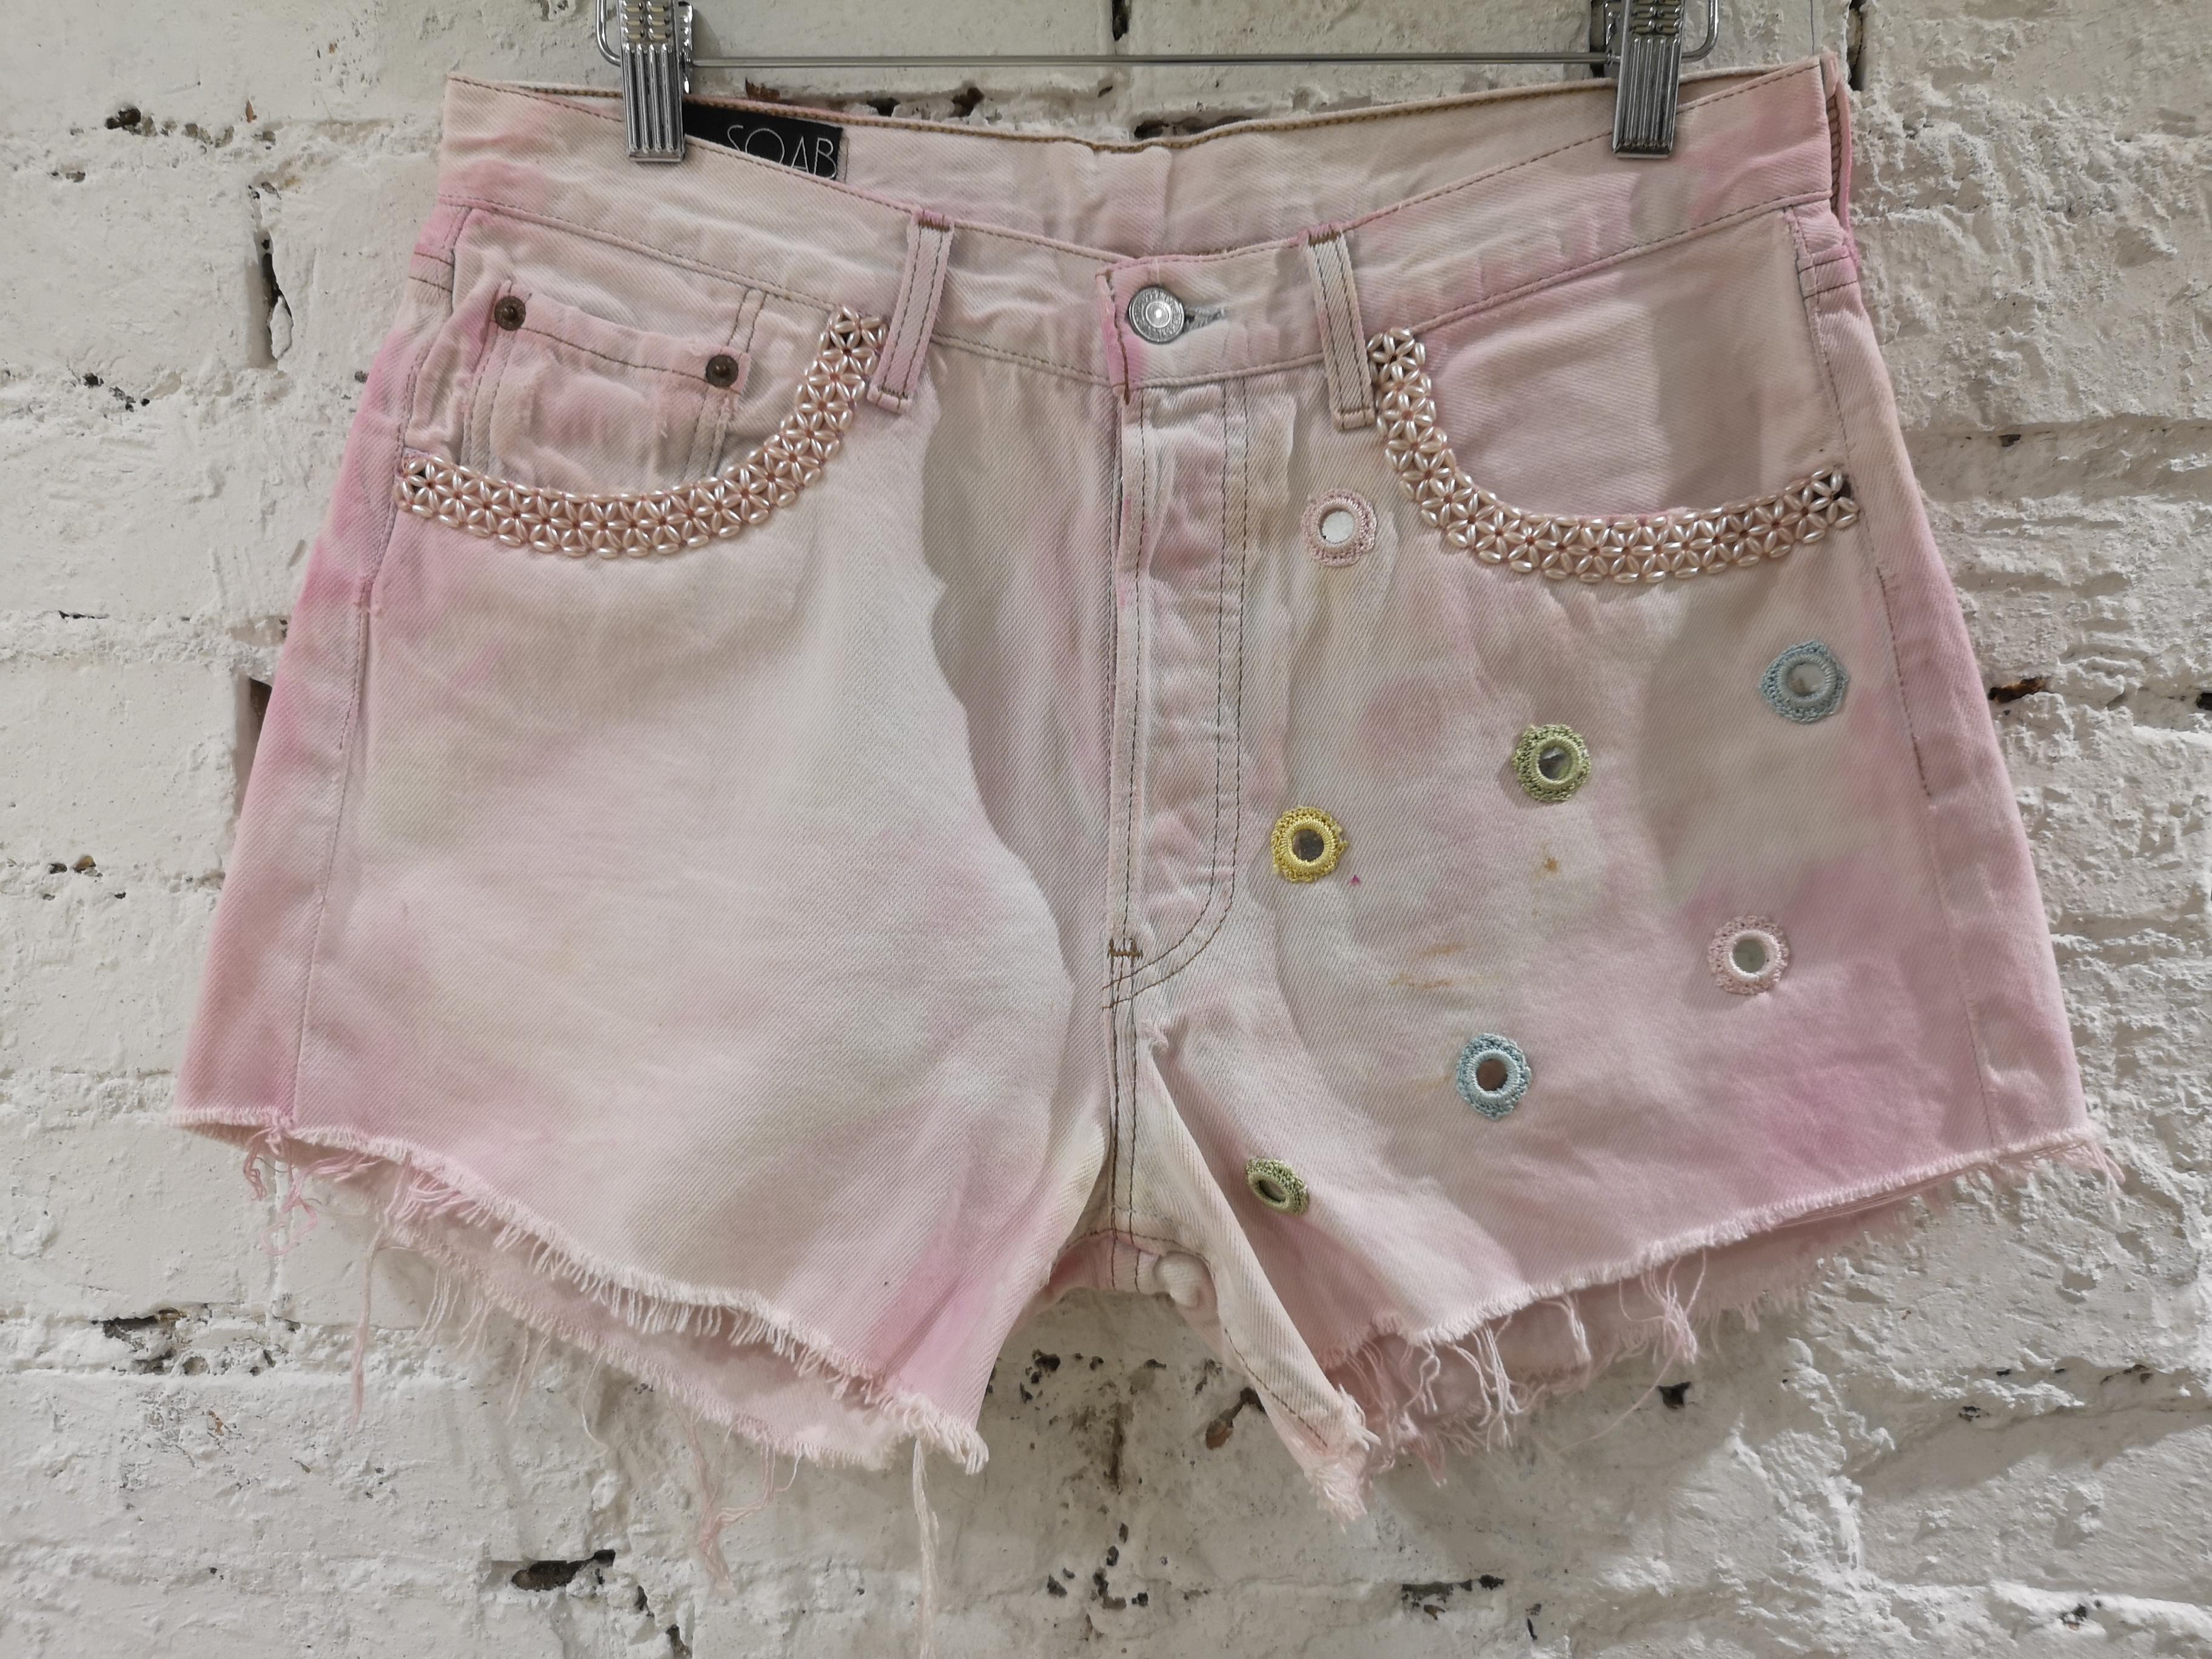 SOAB Handmade light pink denim shorts
measurements: 
82 cm waist
31 cm lenght